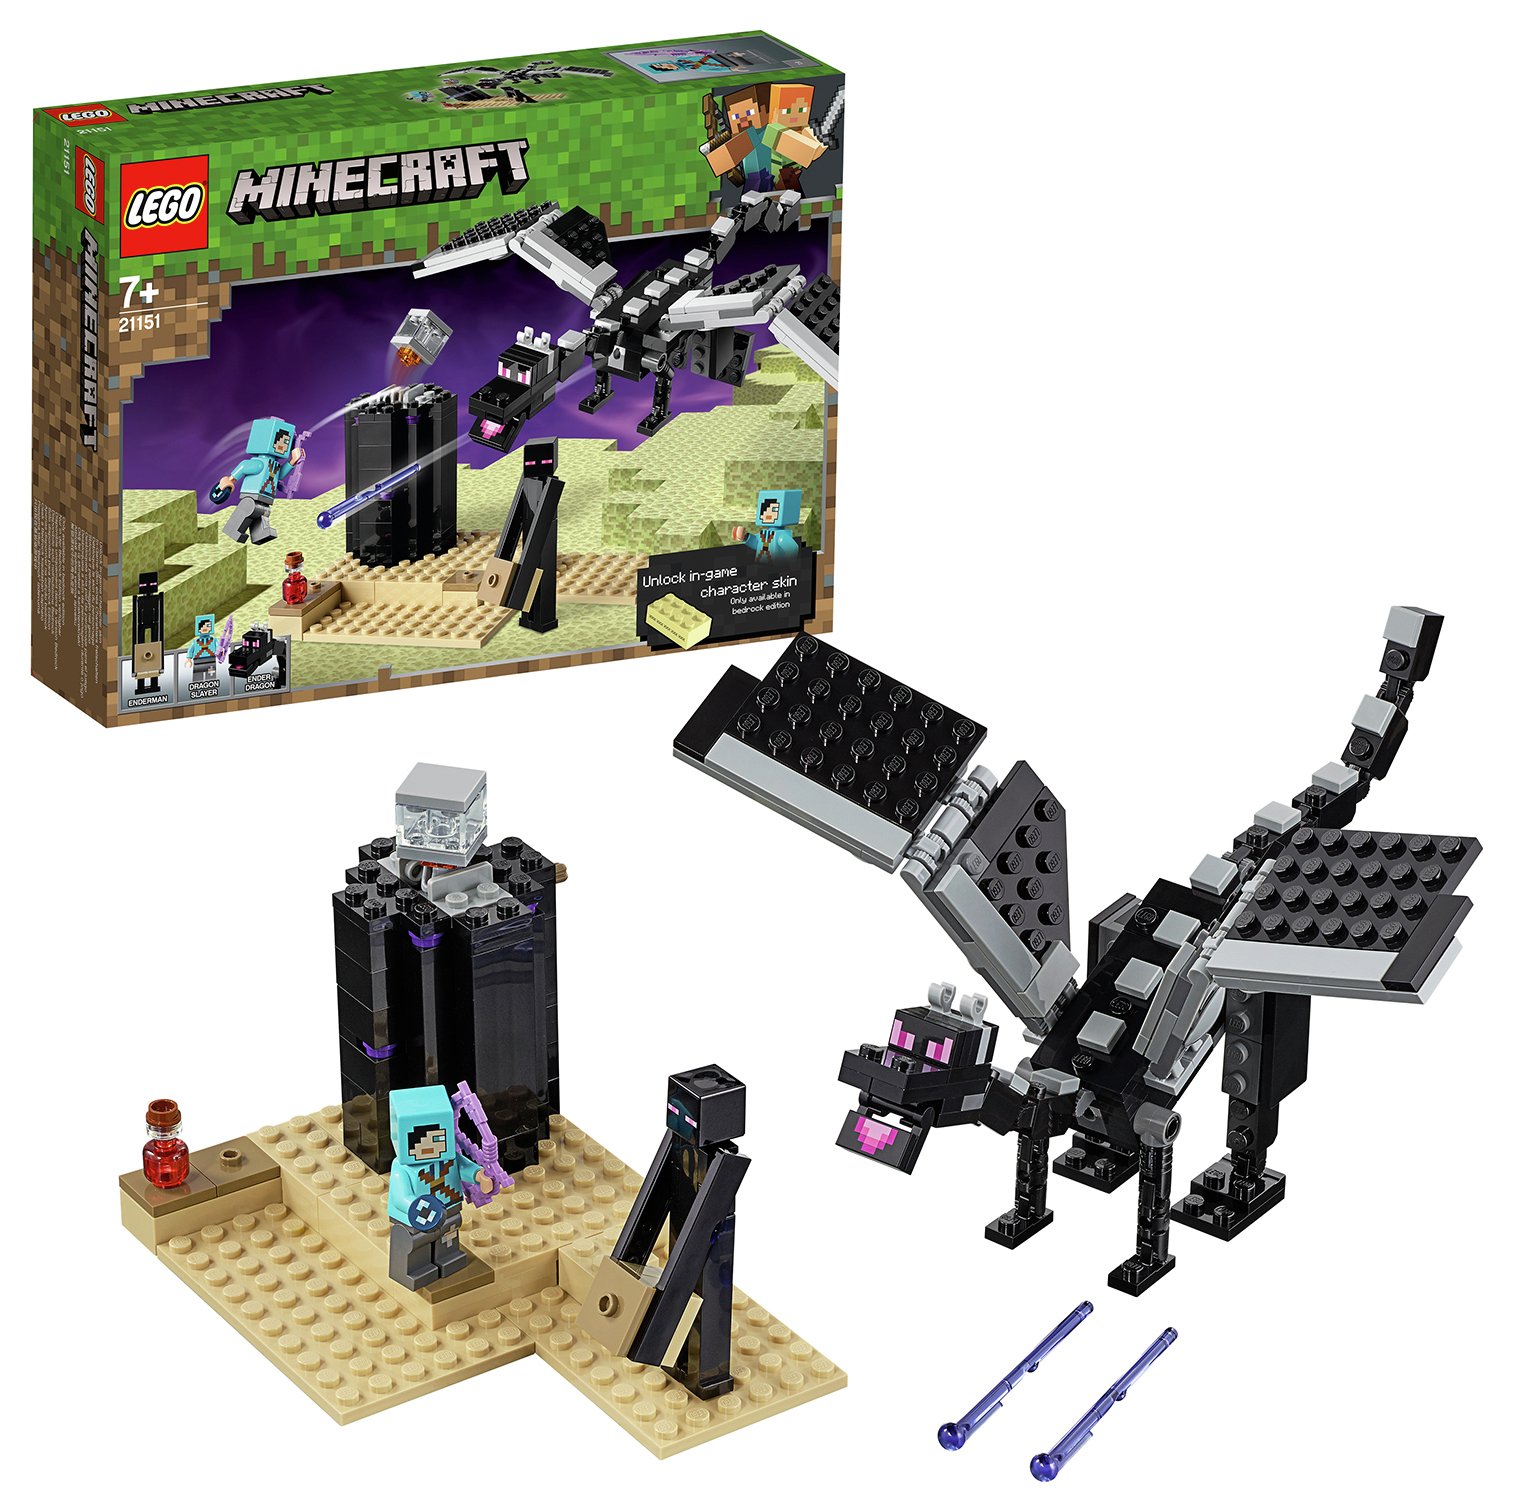 LEGO Minecraft The End Battle Dragon Toy Set - 21151